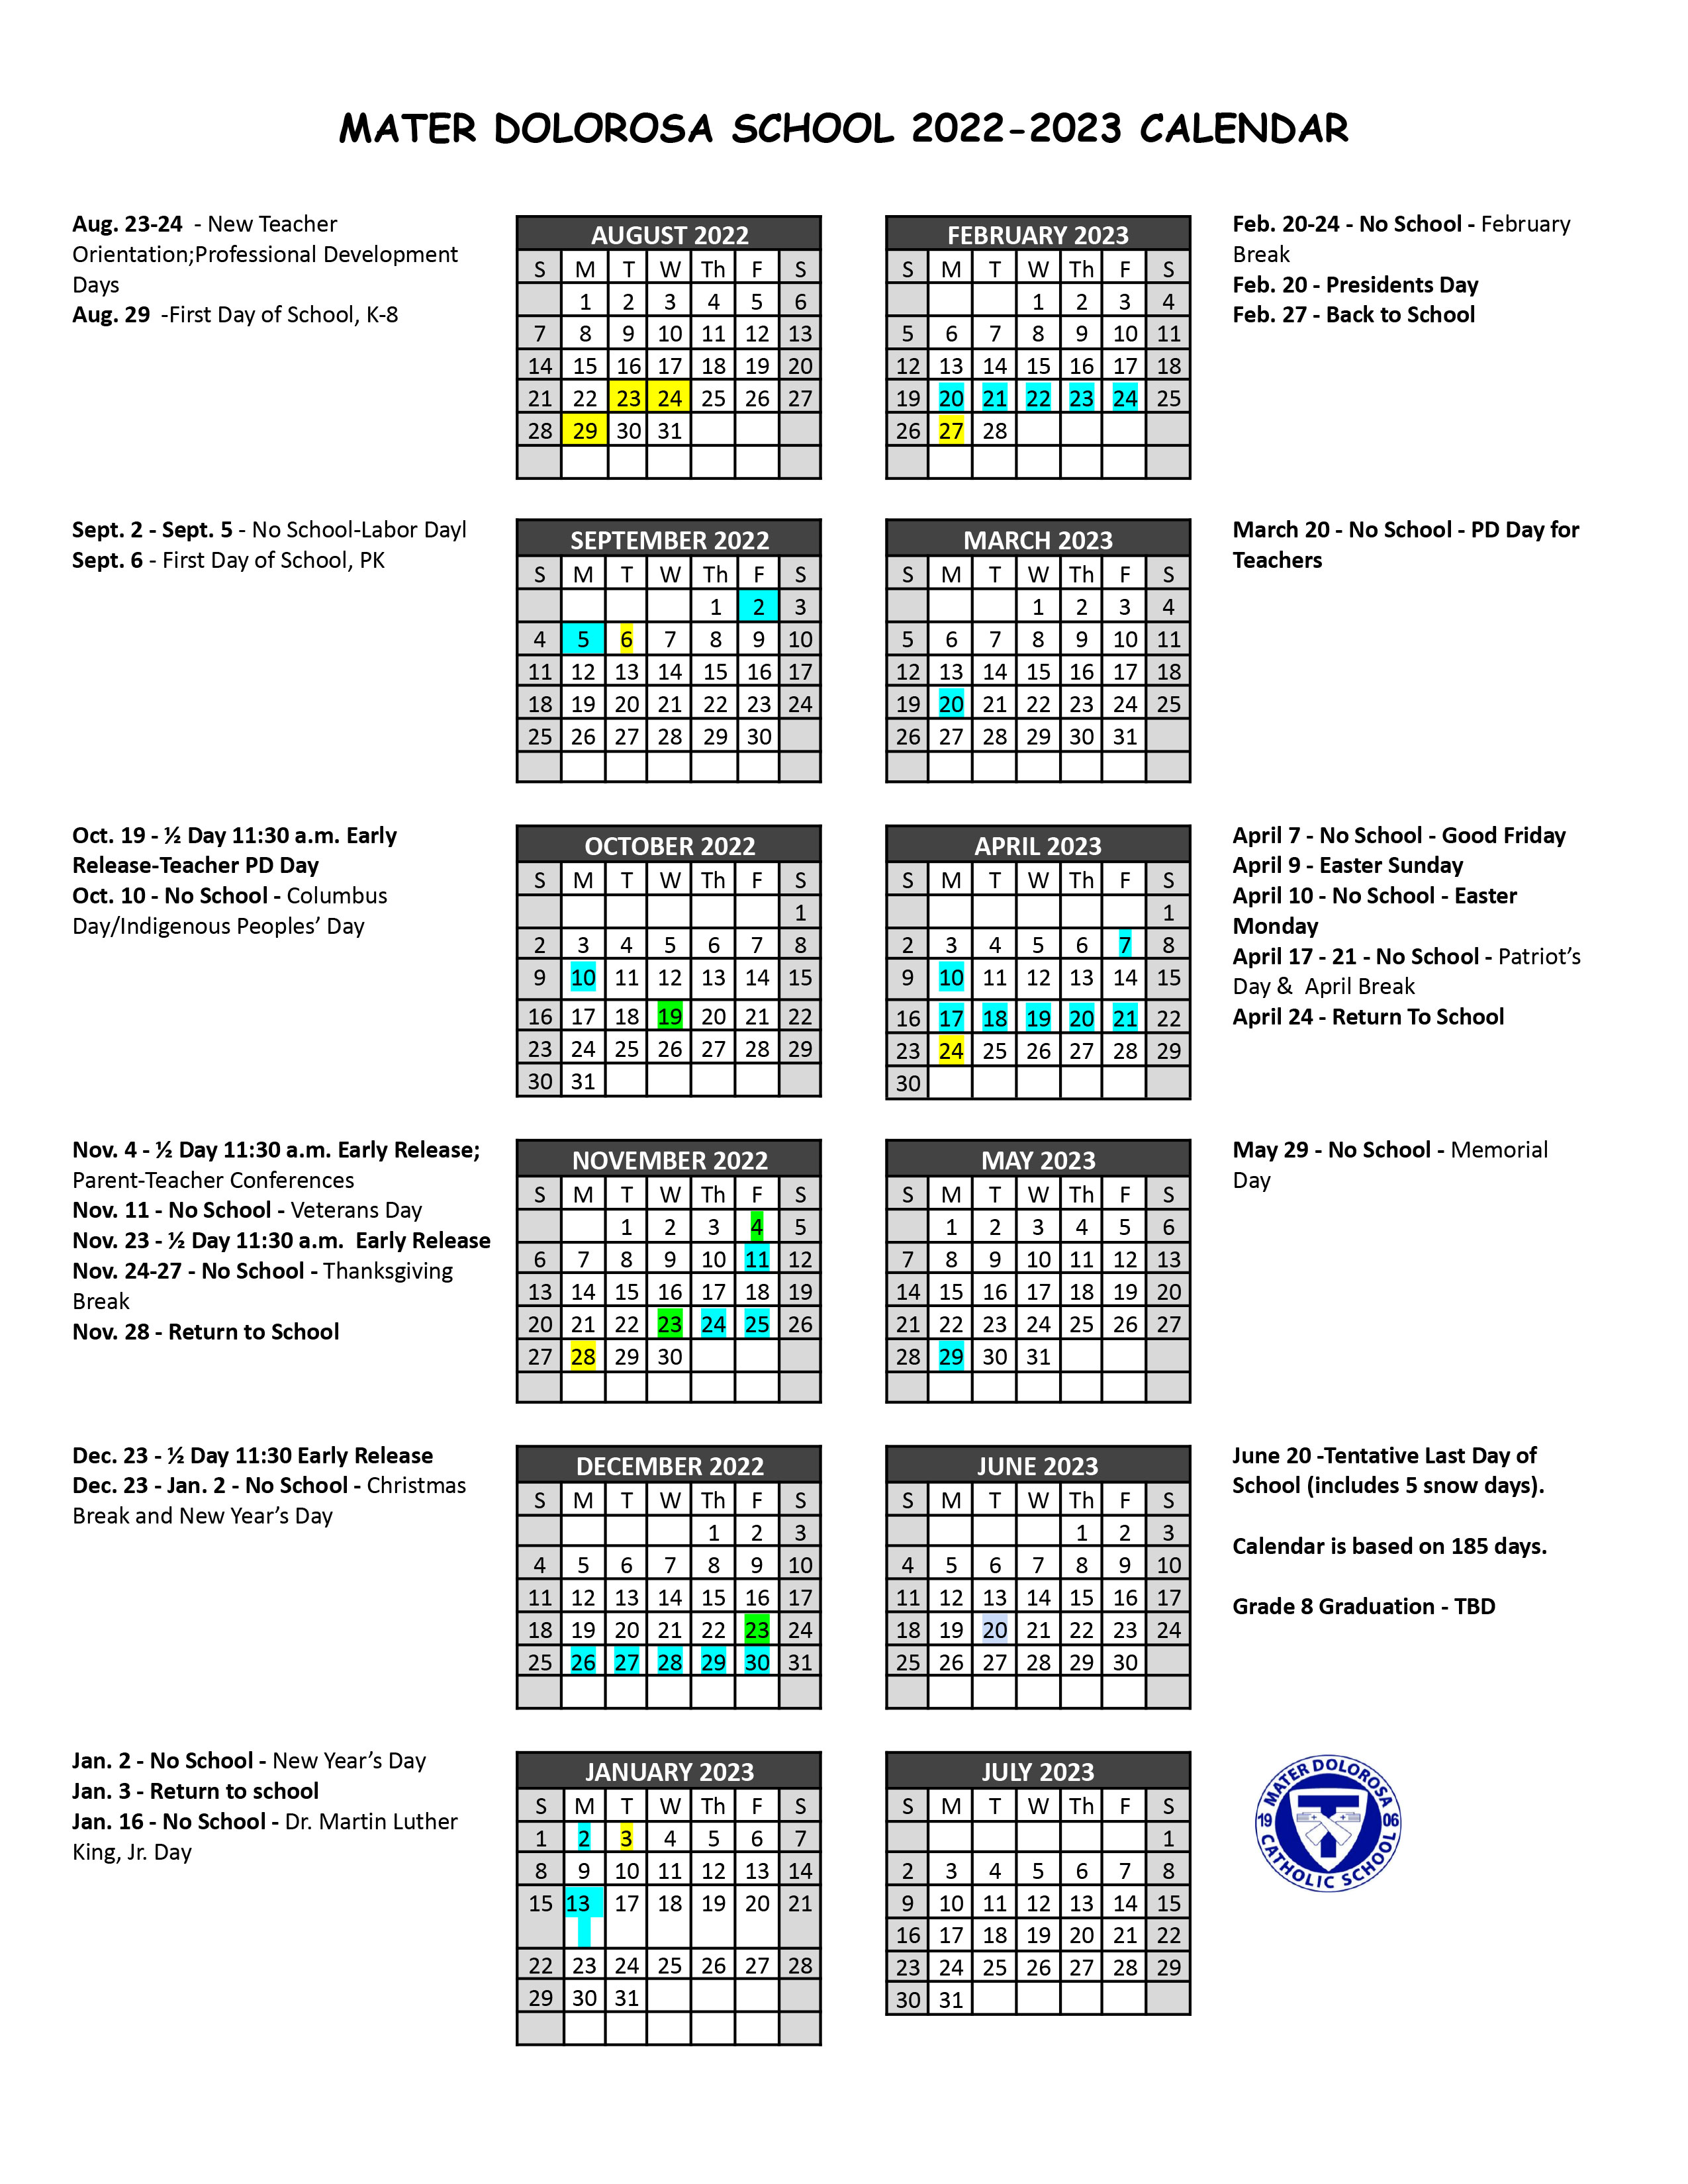 Mater Dolorosa Catholic School Academic Calendar